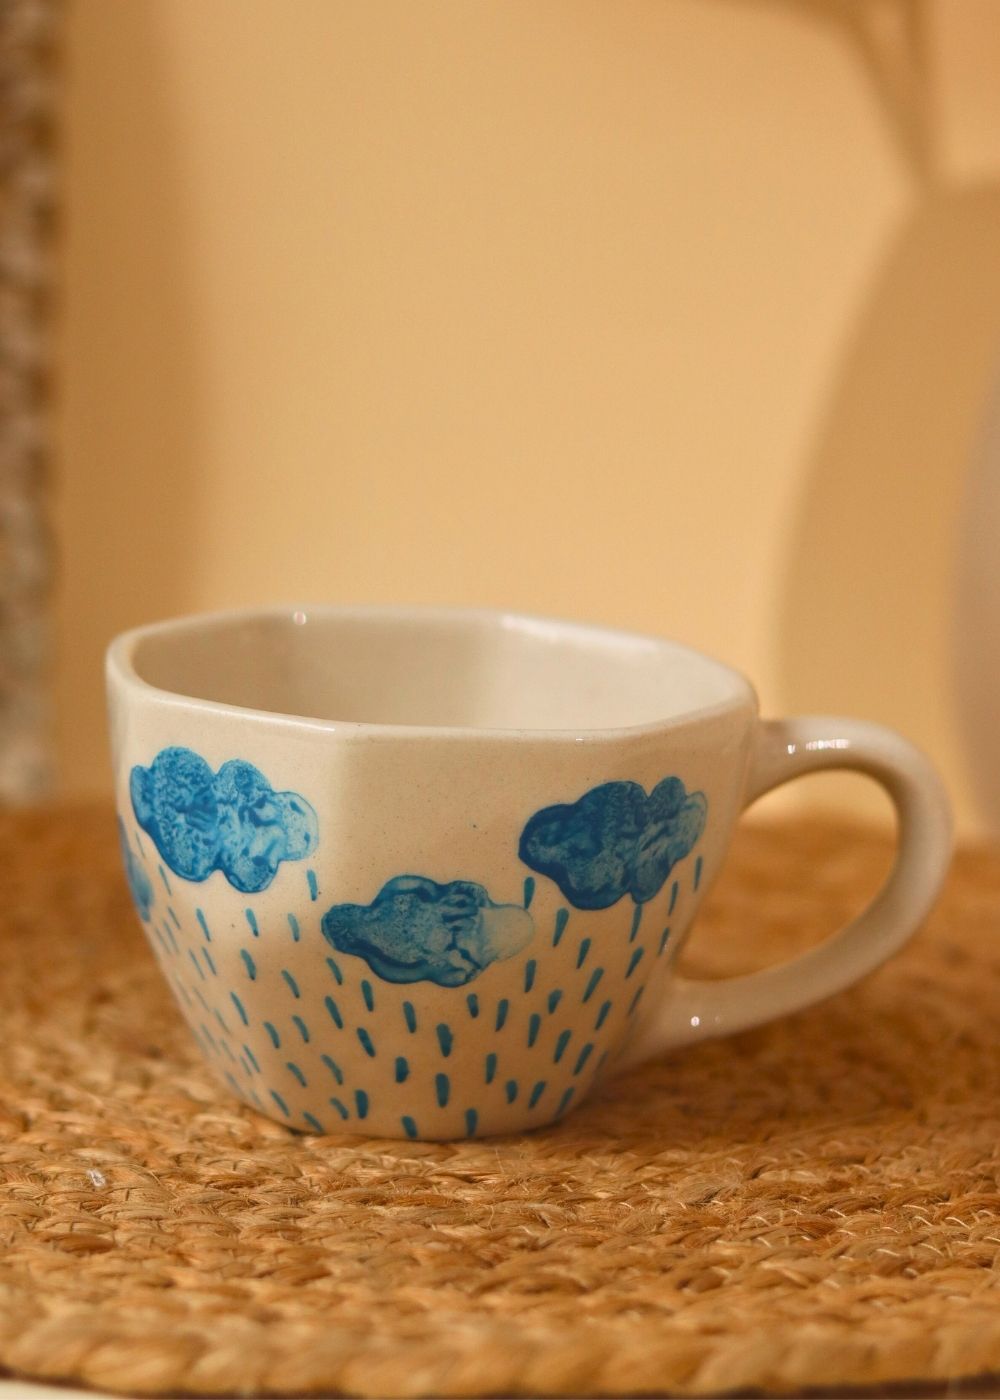 cloud mug with little cloud designs